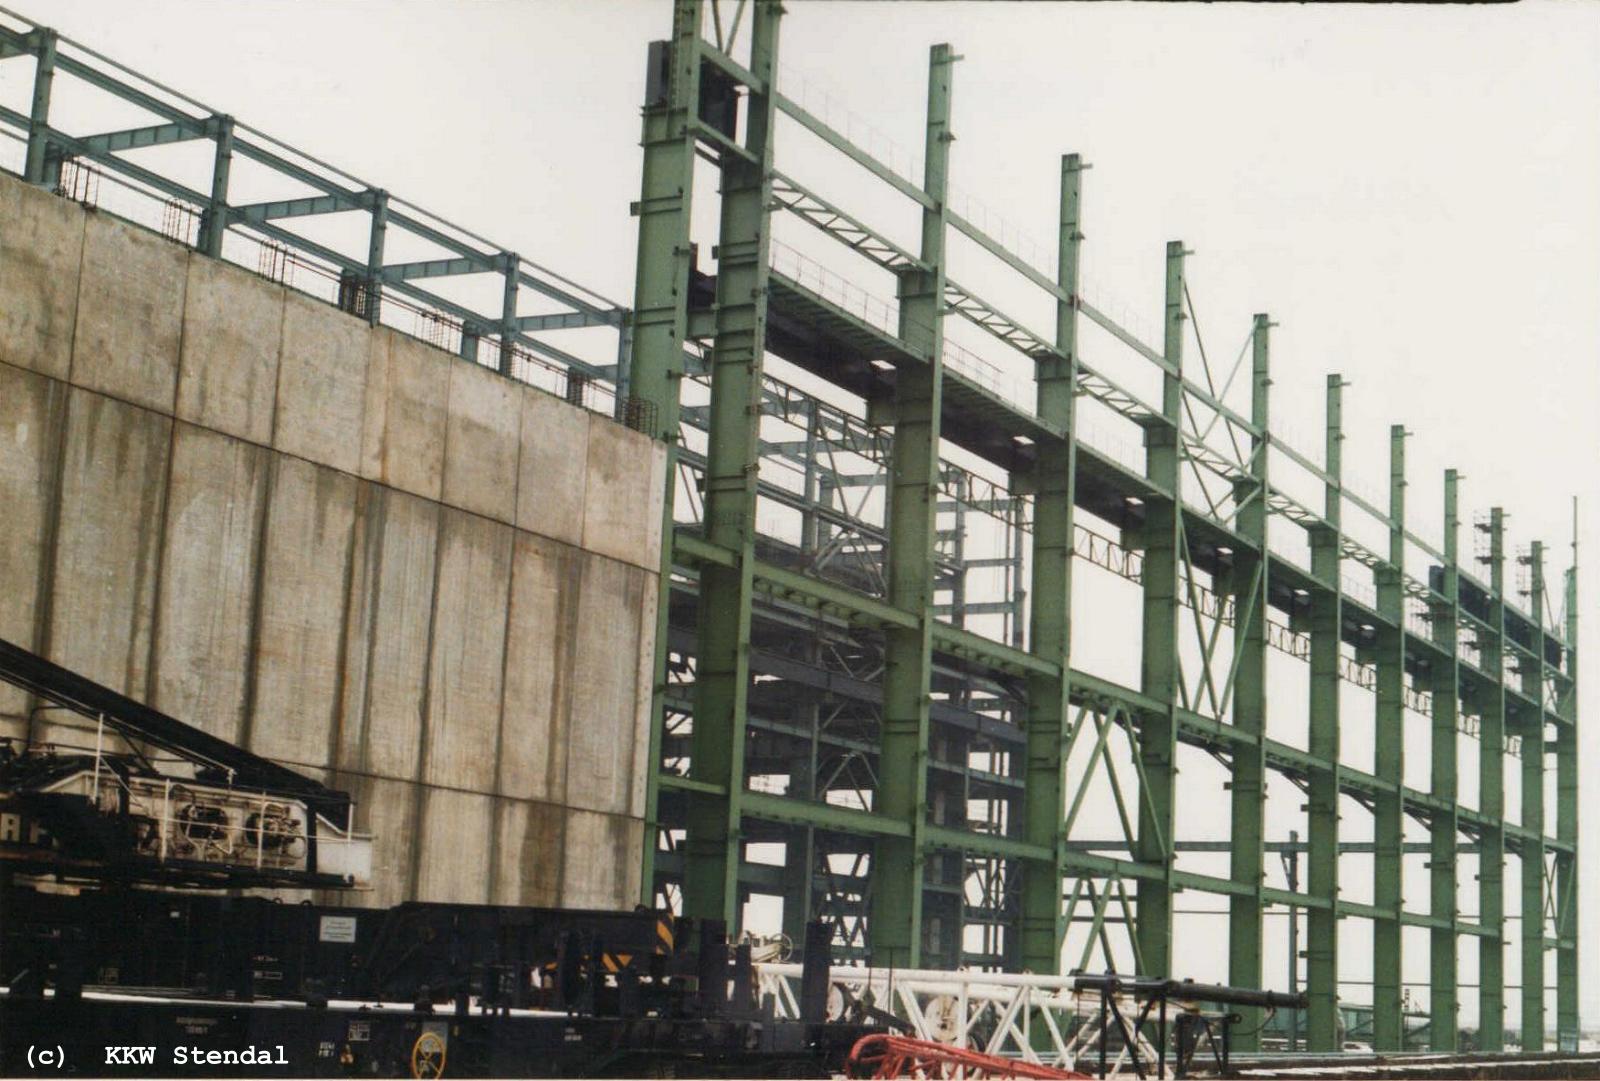  KKW Stendal, Baustelle 1990, Block B, Maschinenhaus Ostansicht 